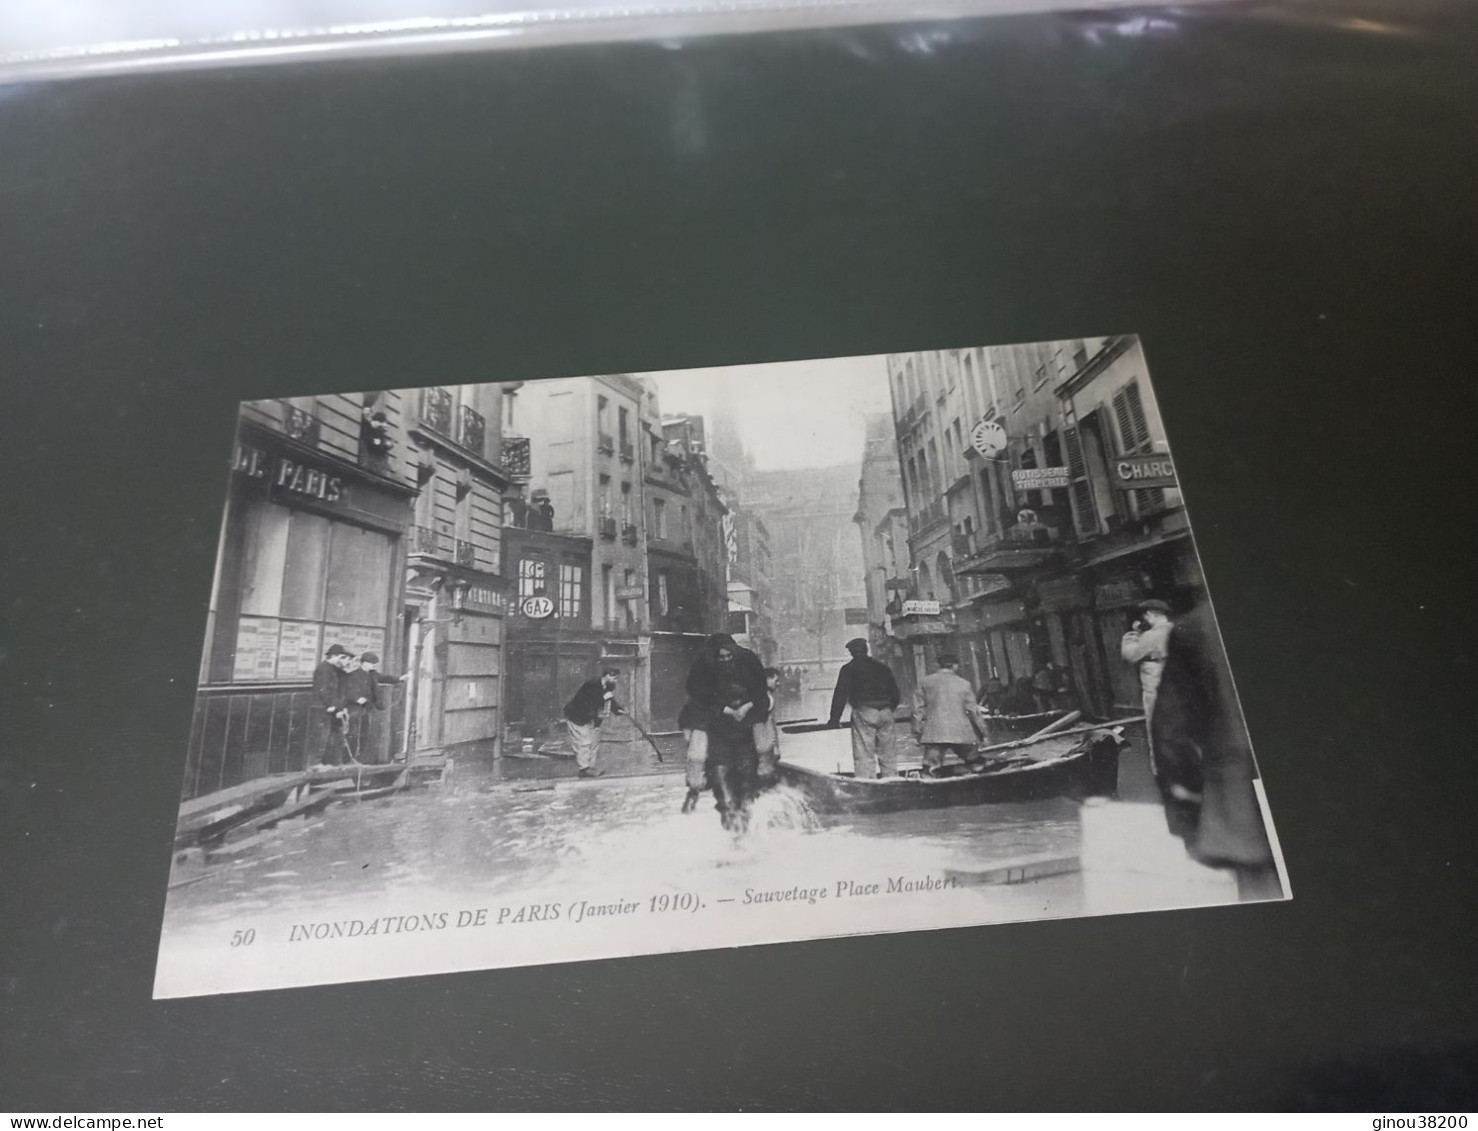 A5/87- Sauvetage Place Maubert - Paris Flood, 1910